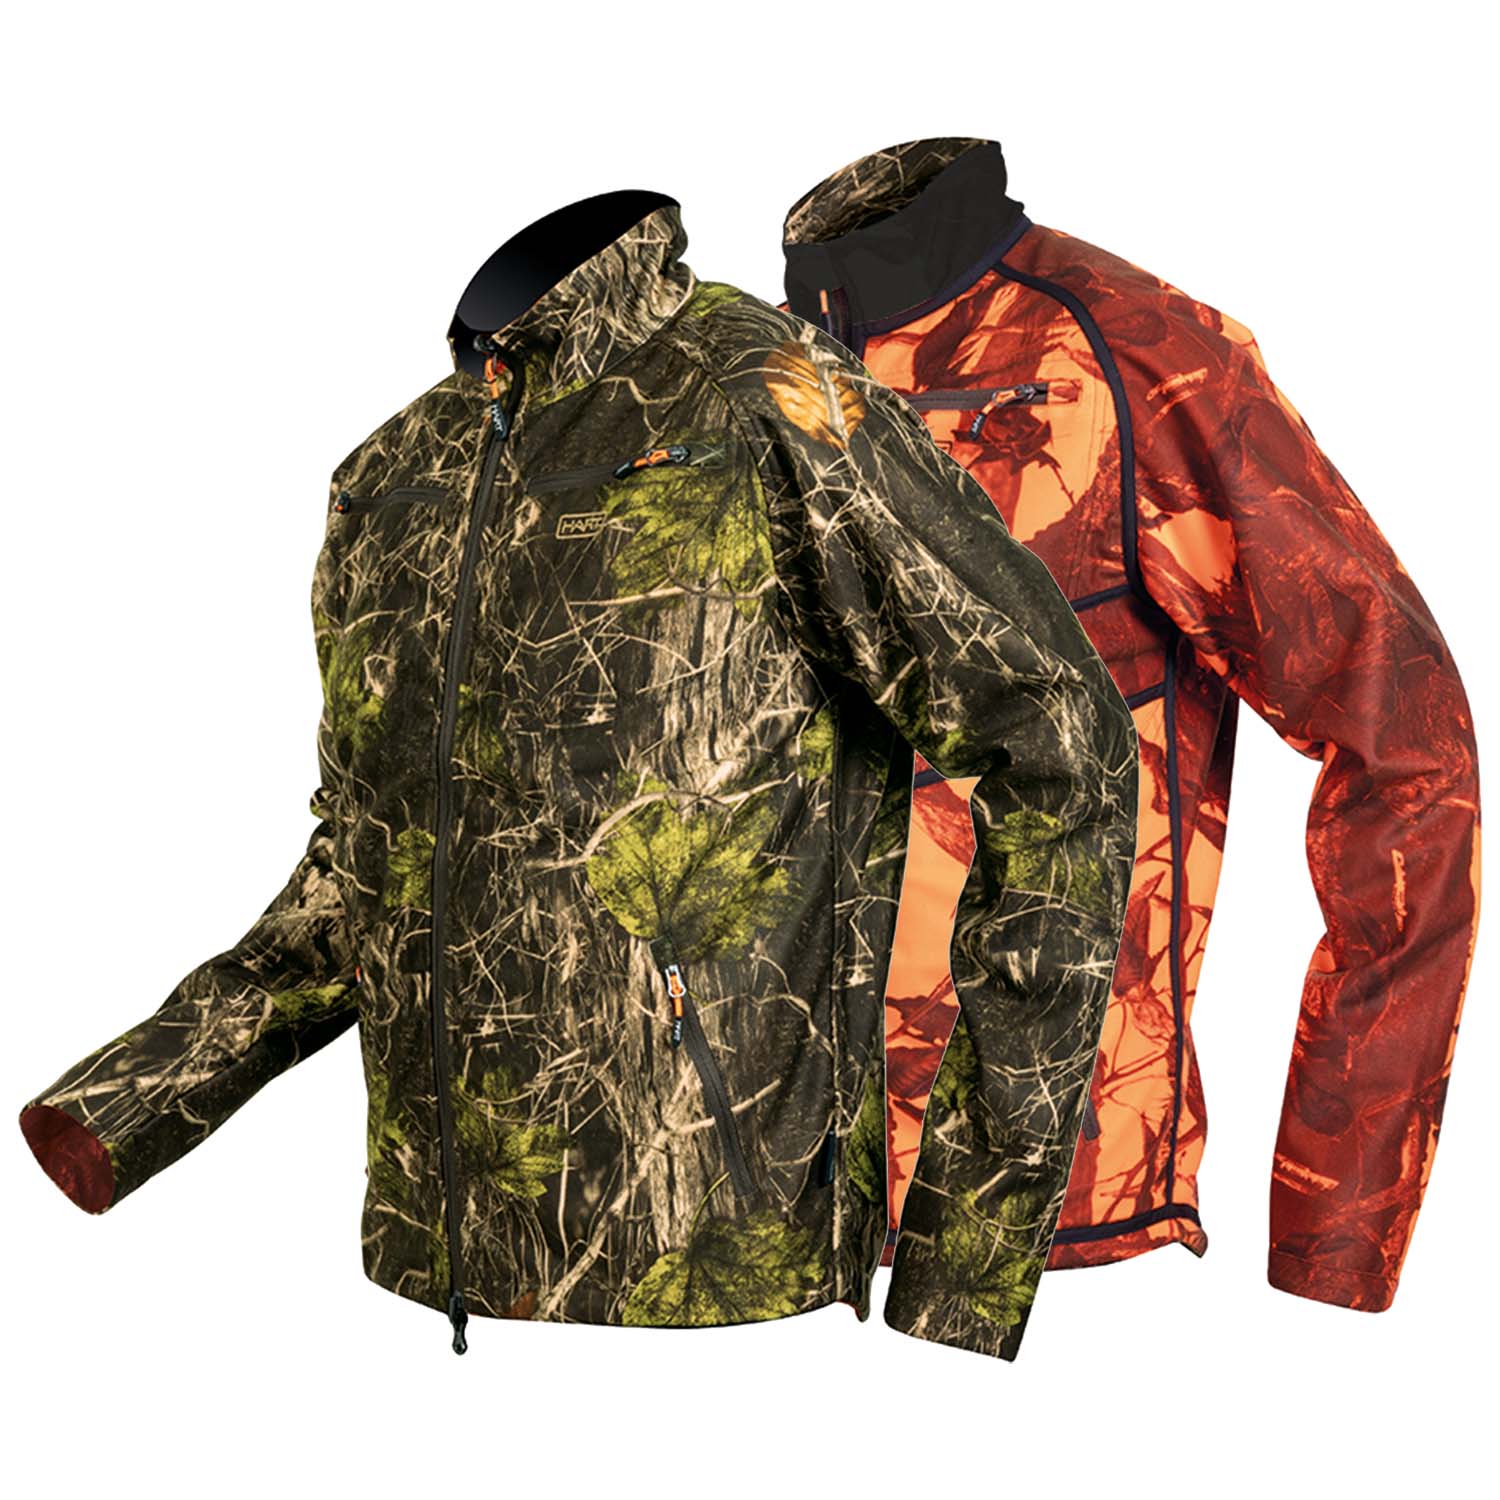 Hart reversible jacket Sosbun - Driven Hunt